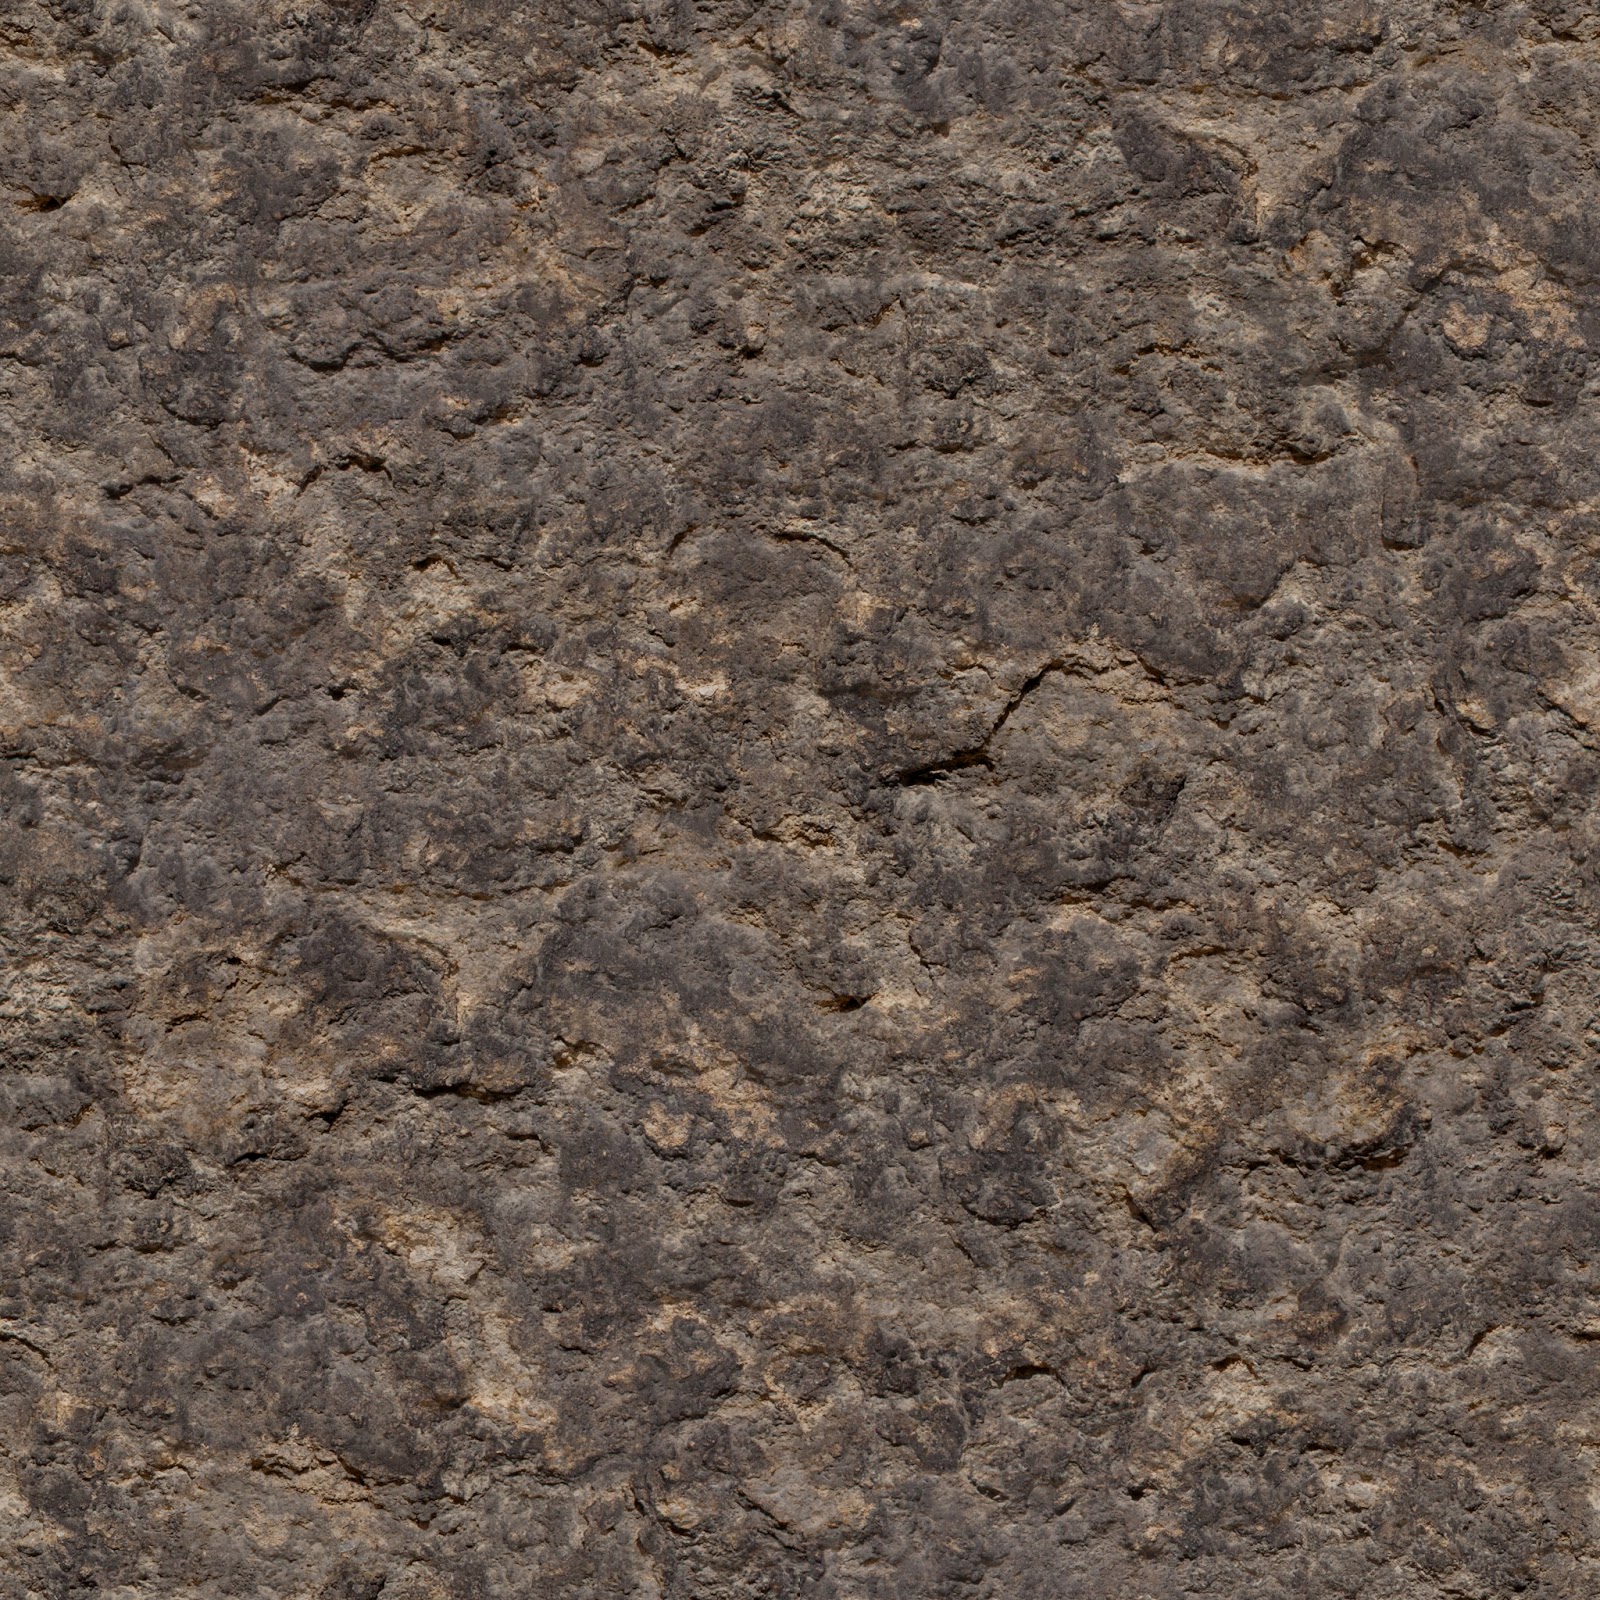 High Resolution Seamless Textures: Seamless Mountain Rock Texture